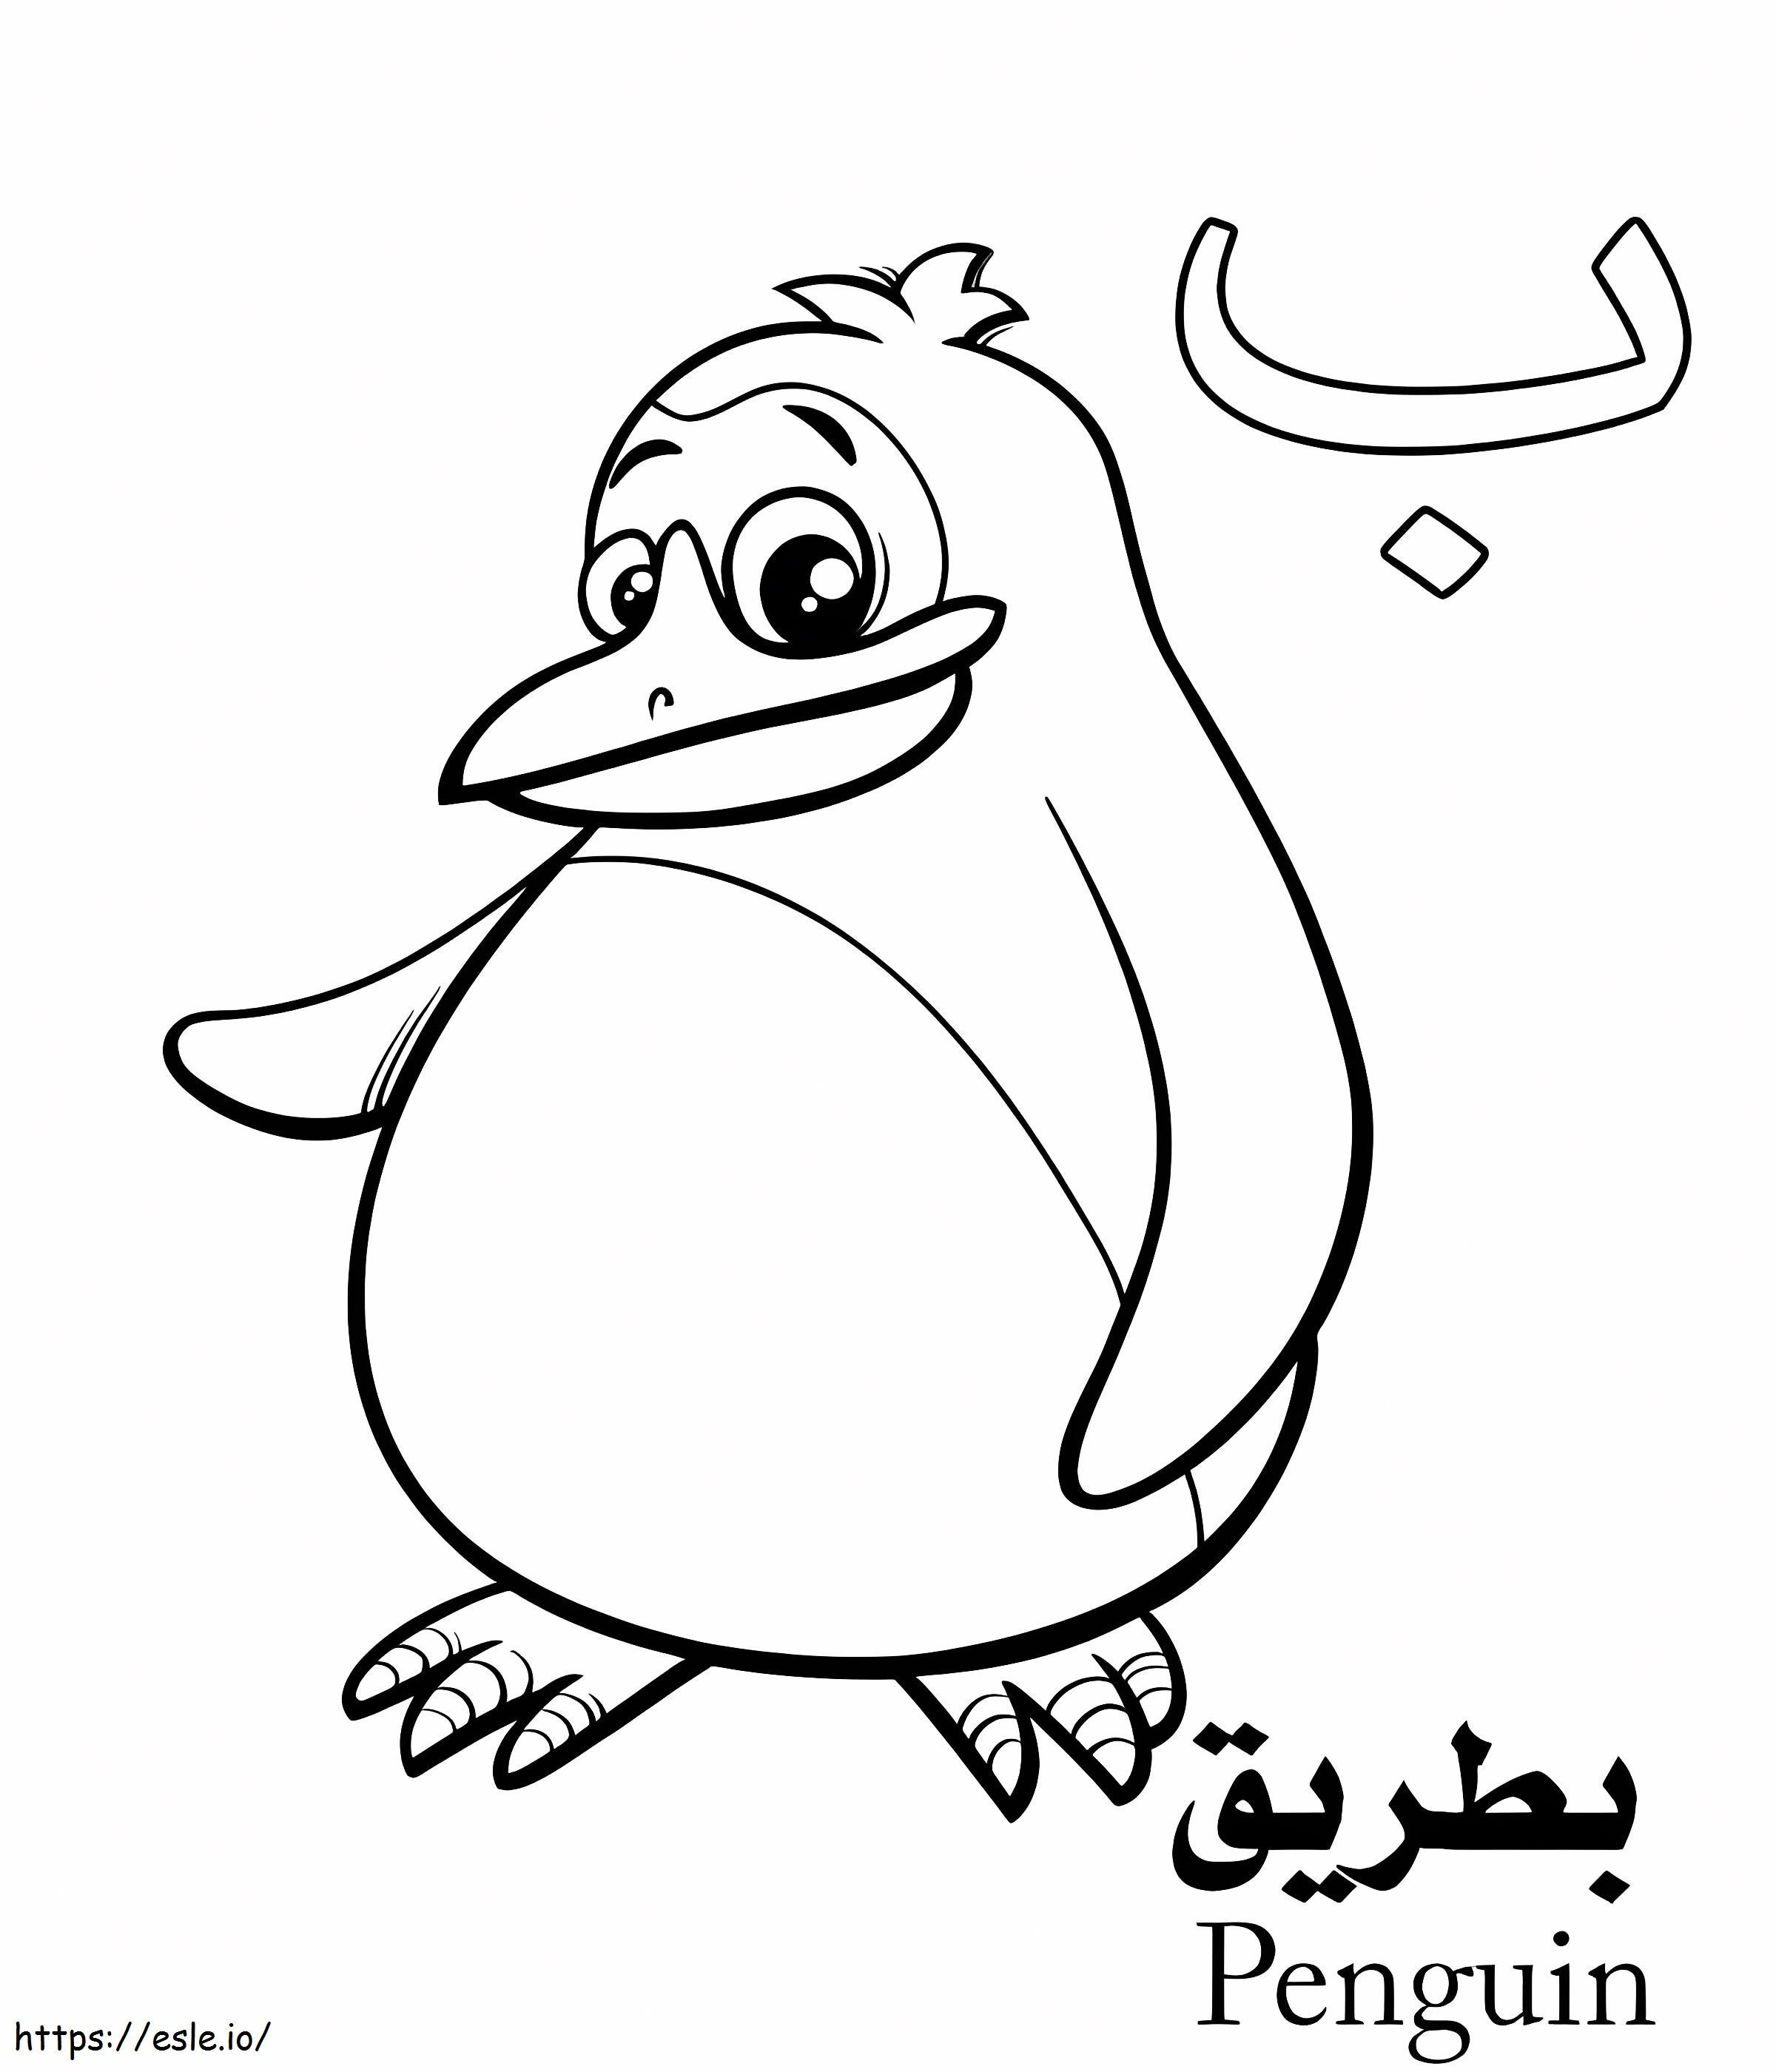 Penguin Arabic Alphabet coloring page